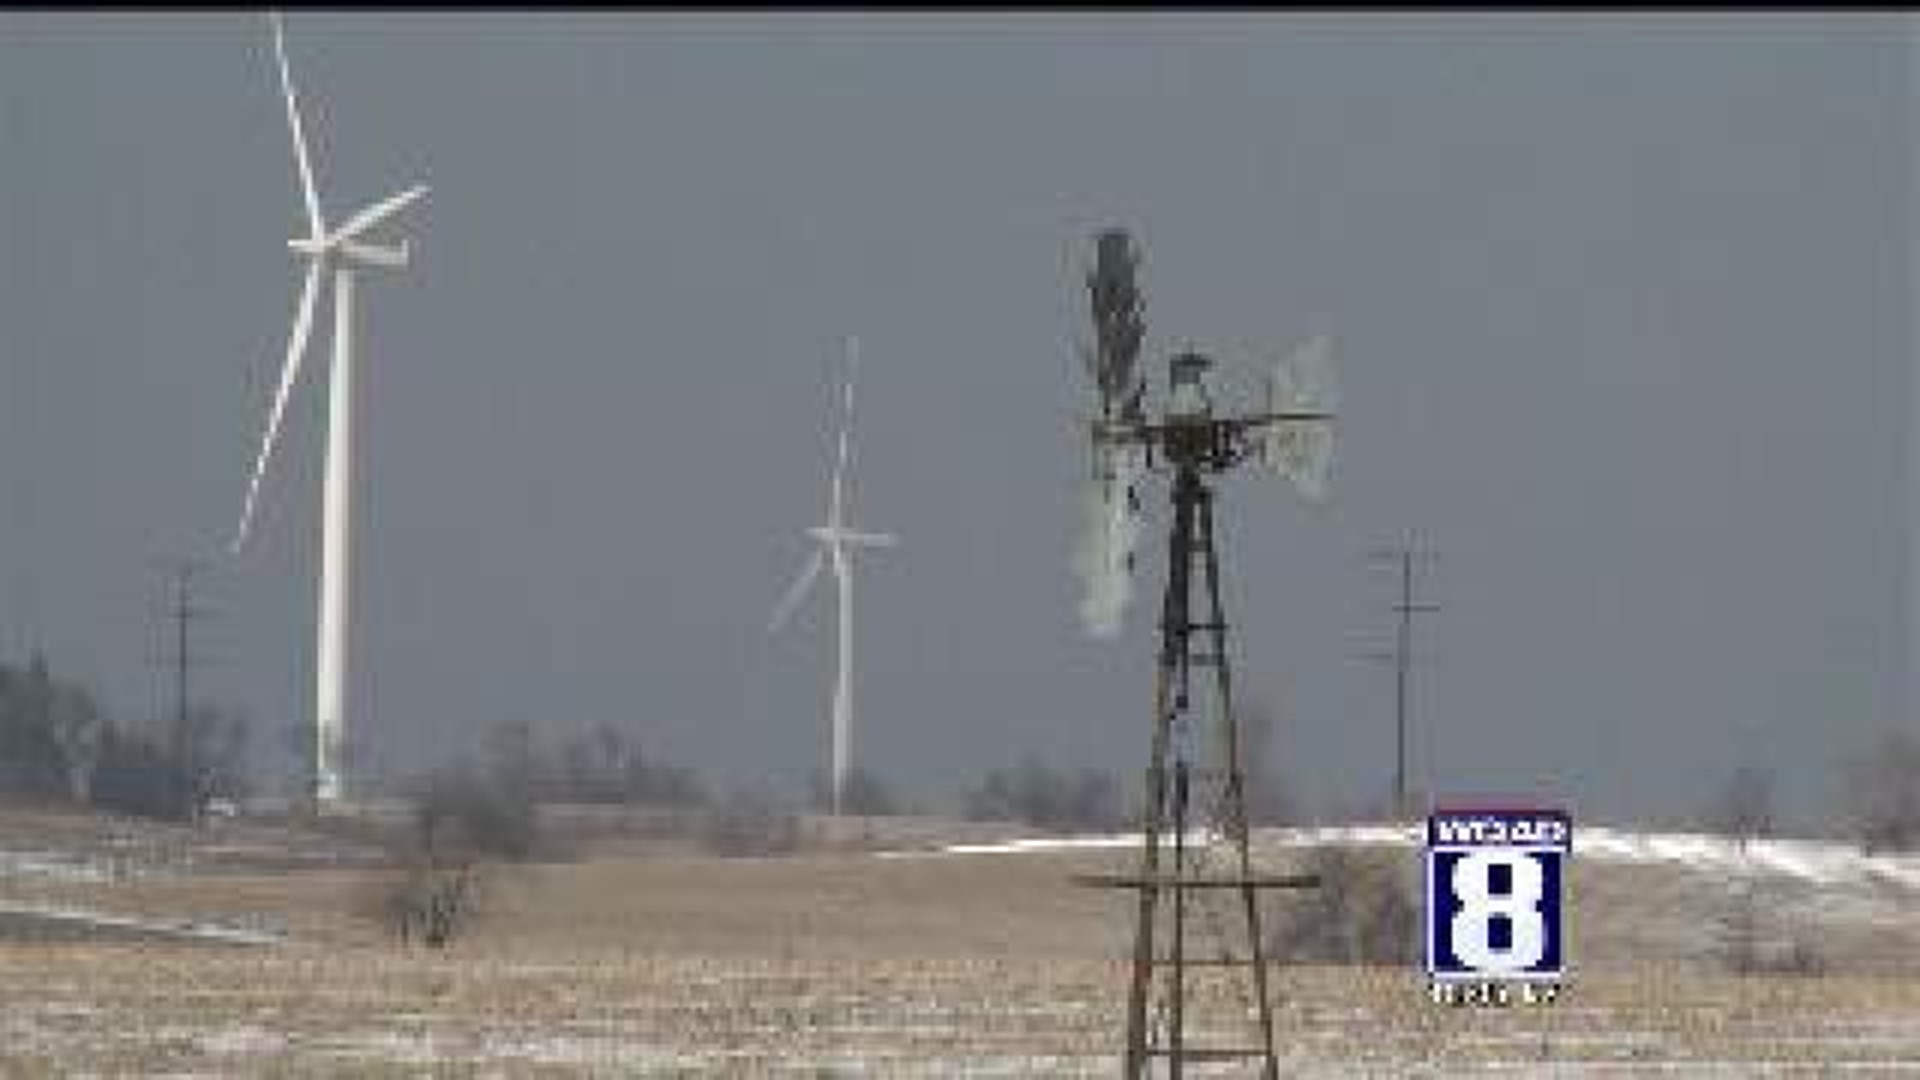 Wind turbines to be built across Iowa